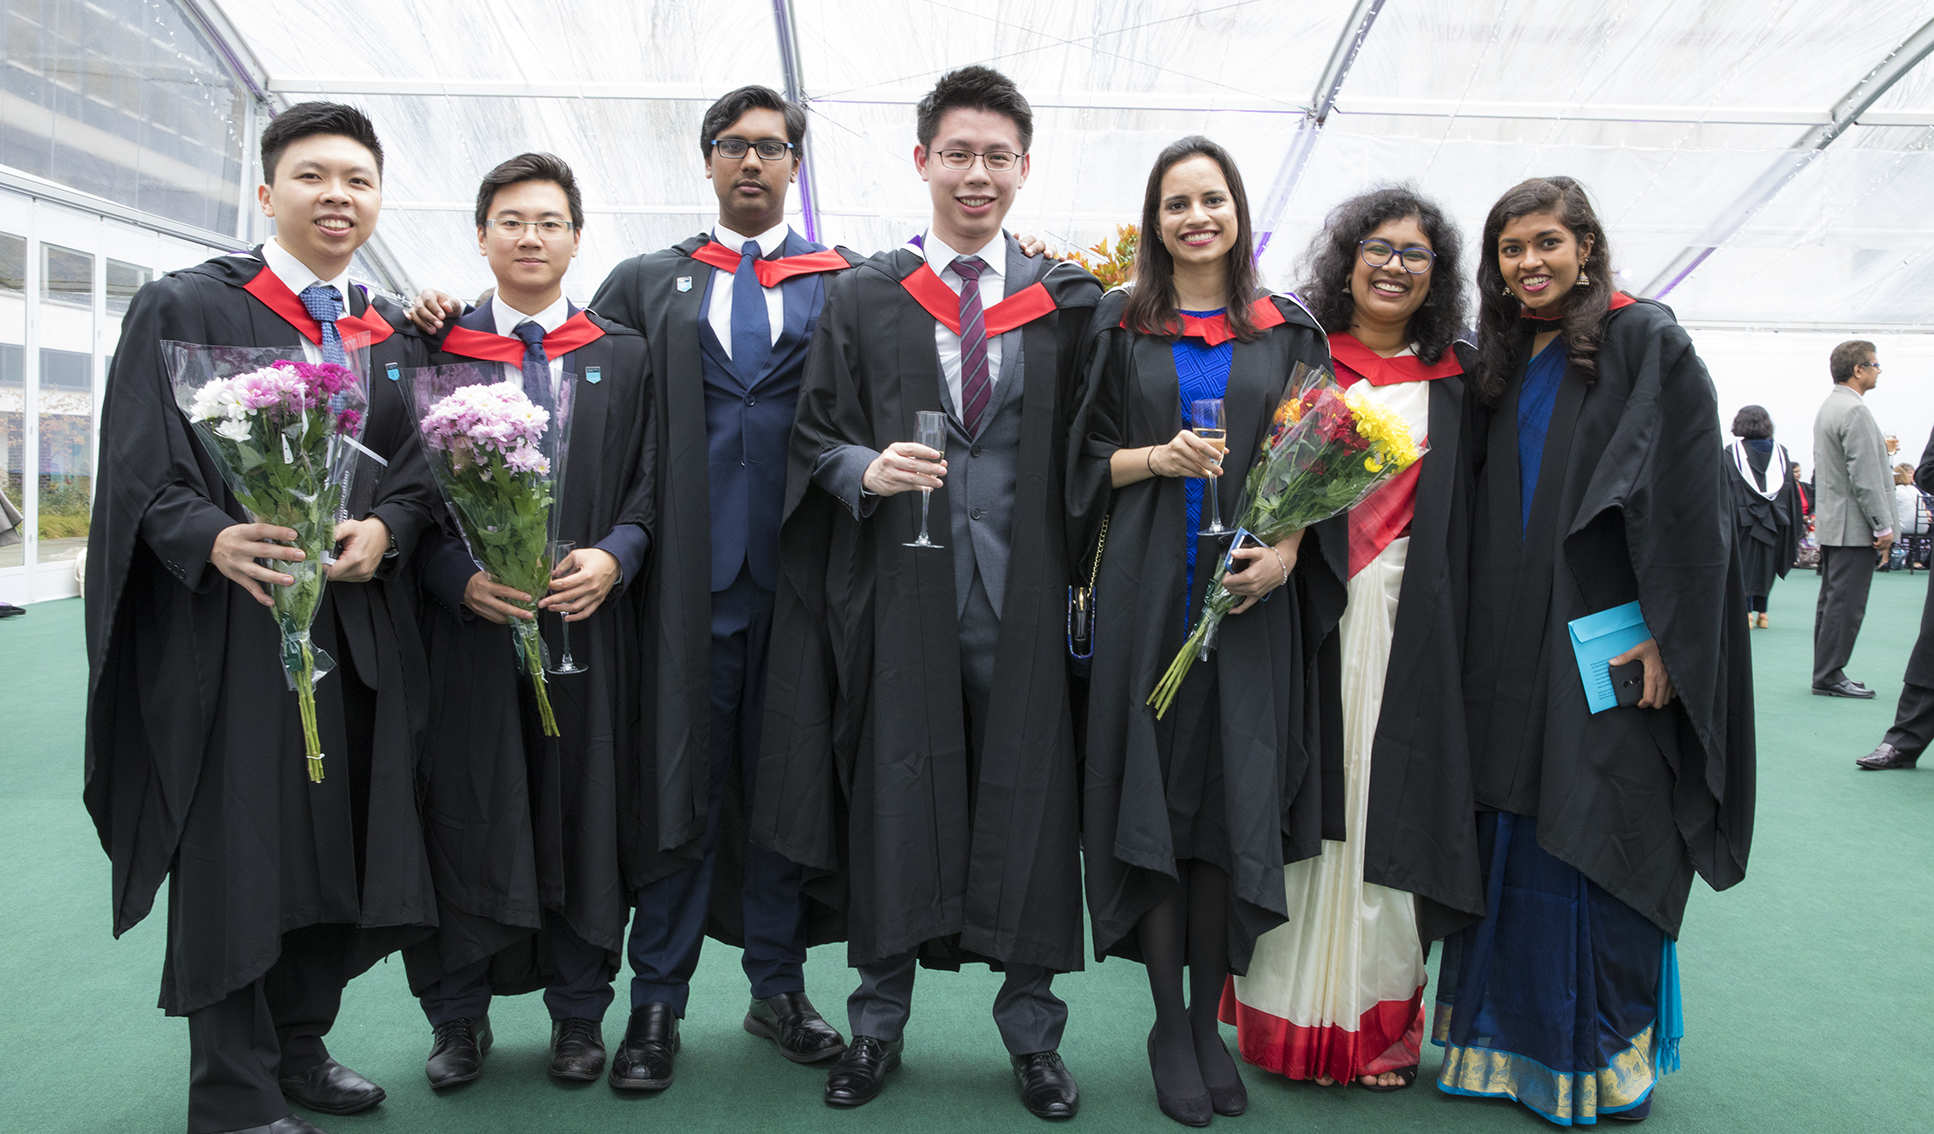 Graduating medicine students at their celebration reception